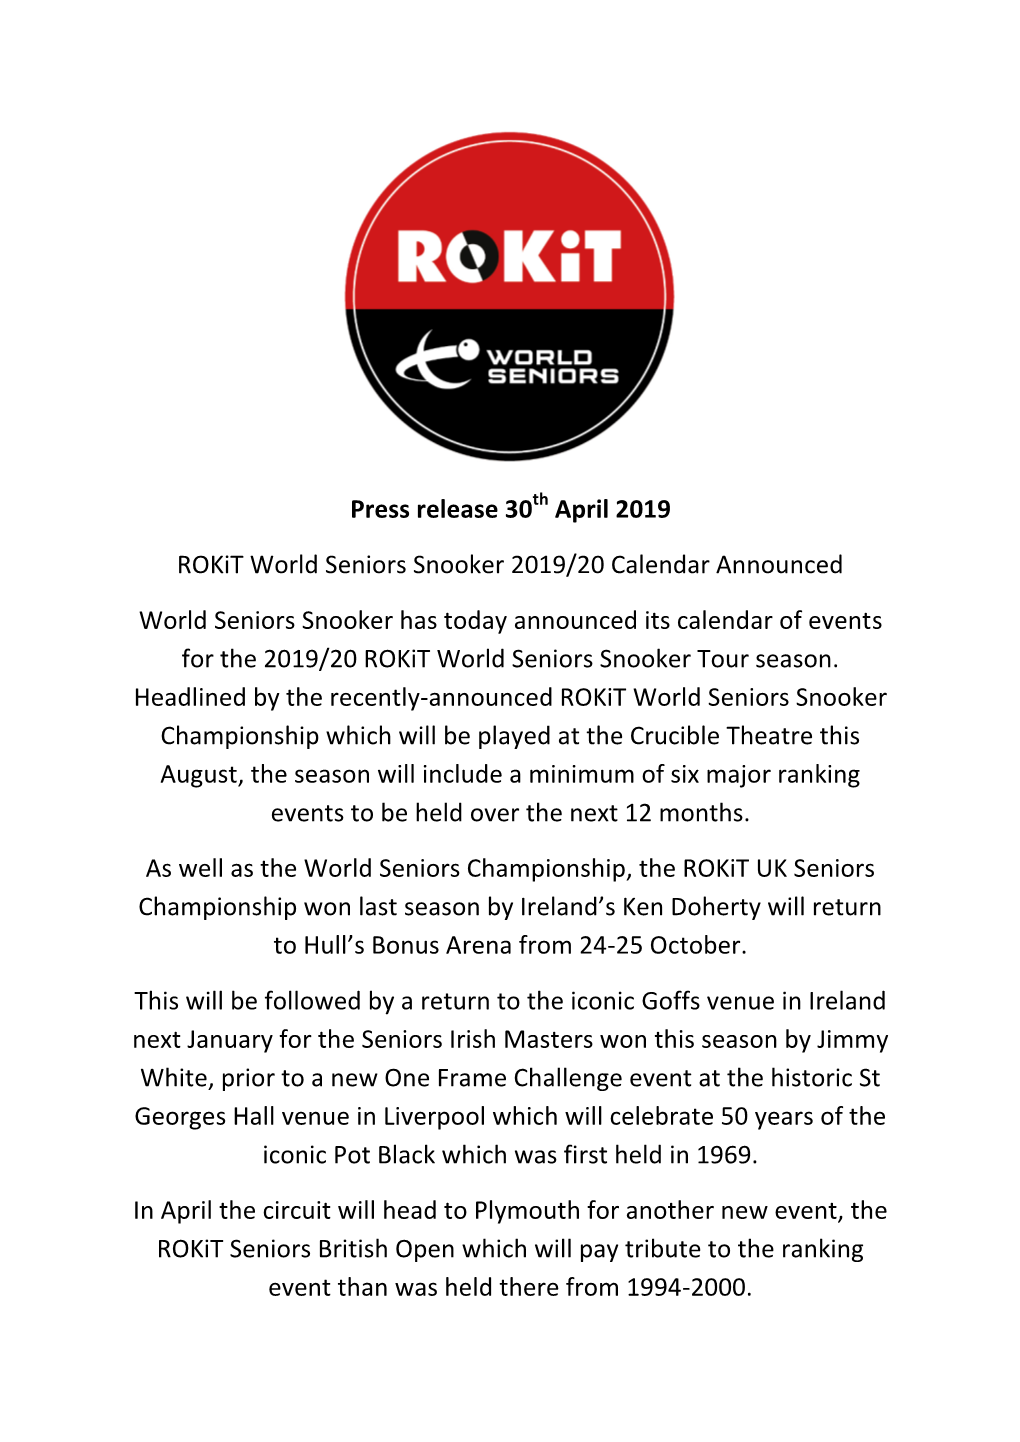 Press Release 30 April 2019 Rokit World Seniors Snooker 2019/20